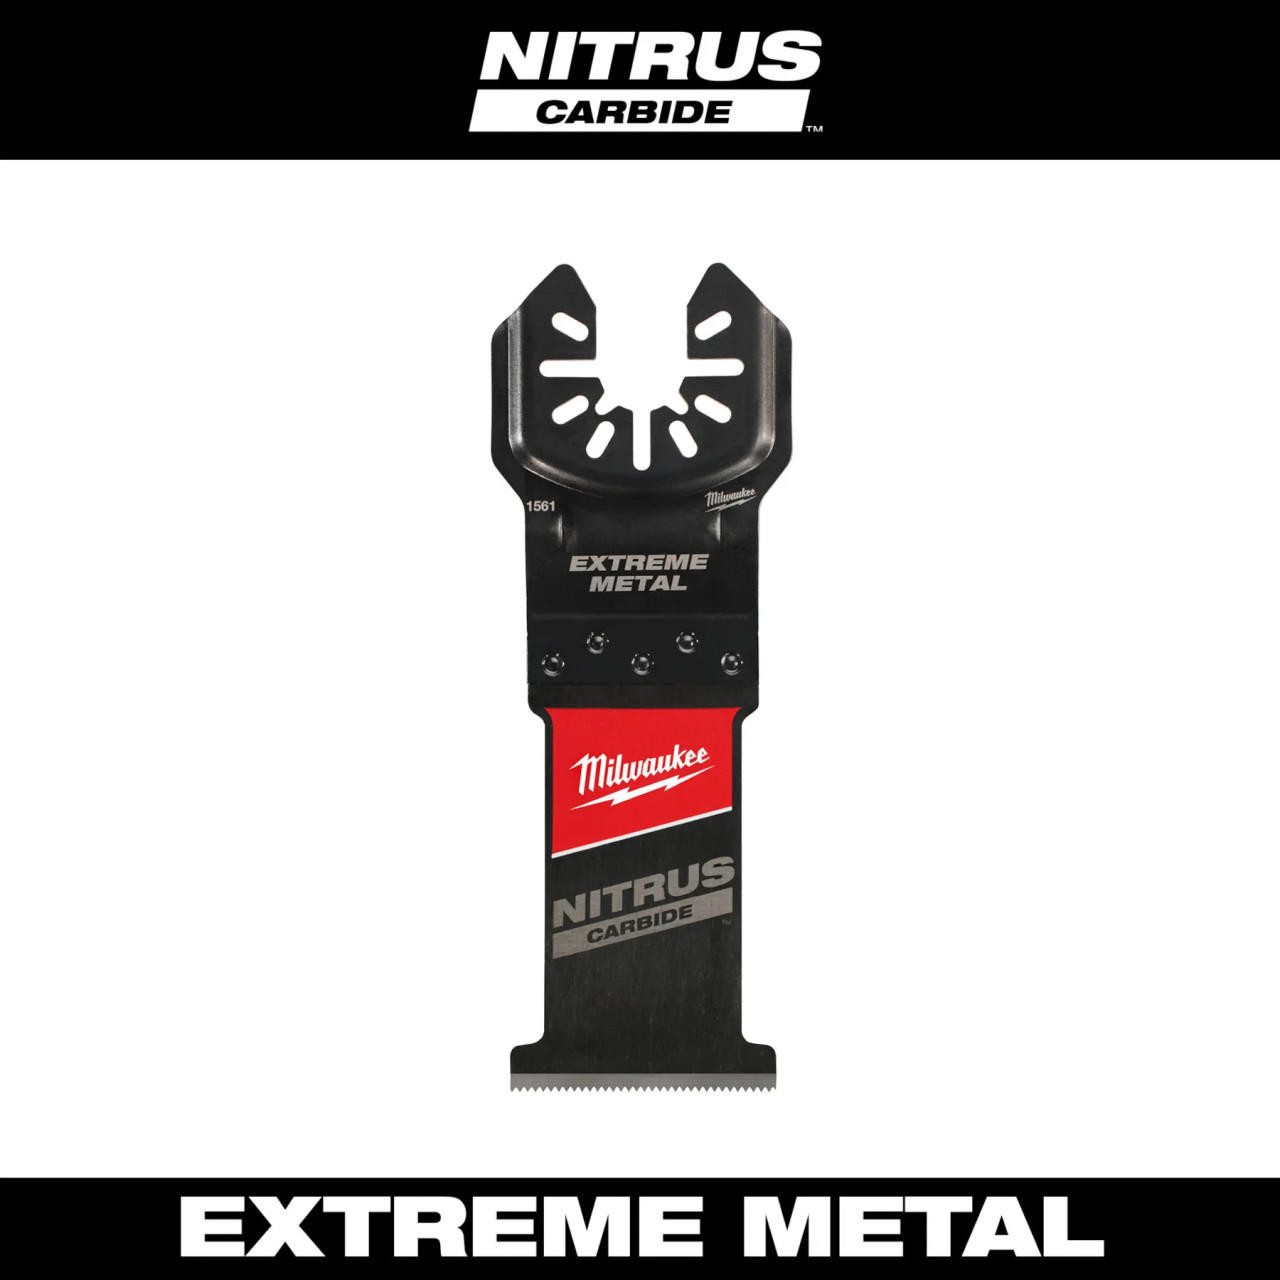  Milwaukee NITRUS CARBIDE Extreme Metal Universal Fit OPEN-LOK Multi-Tool Blade 1PK 49-25-1561 